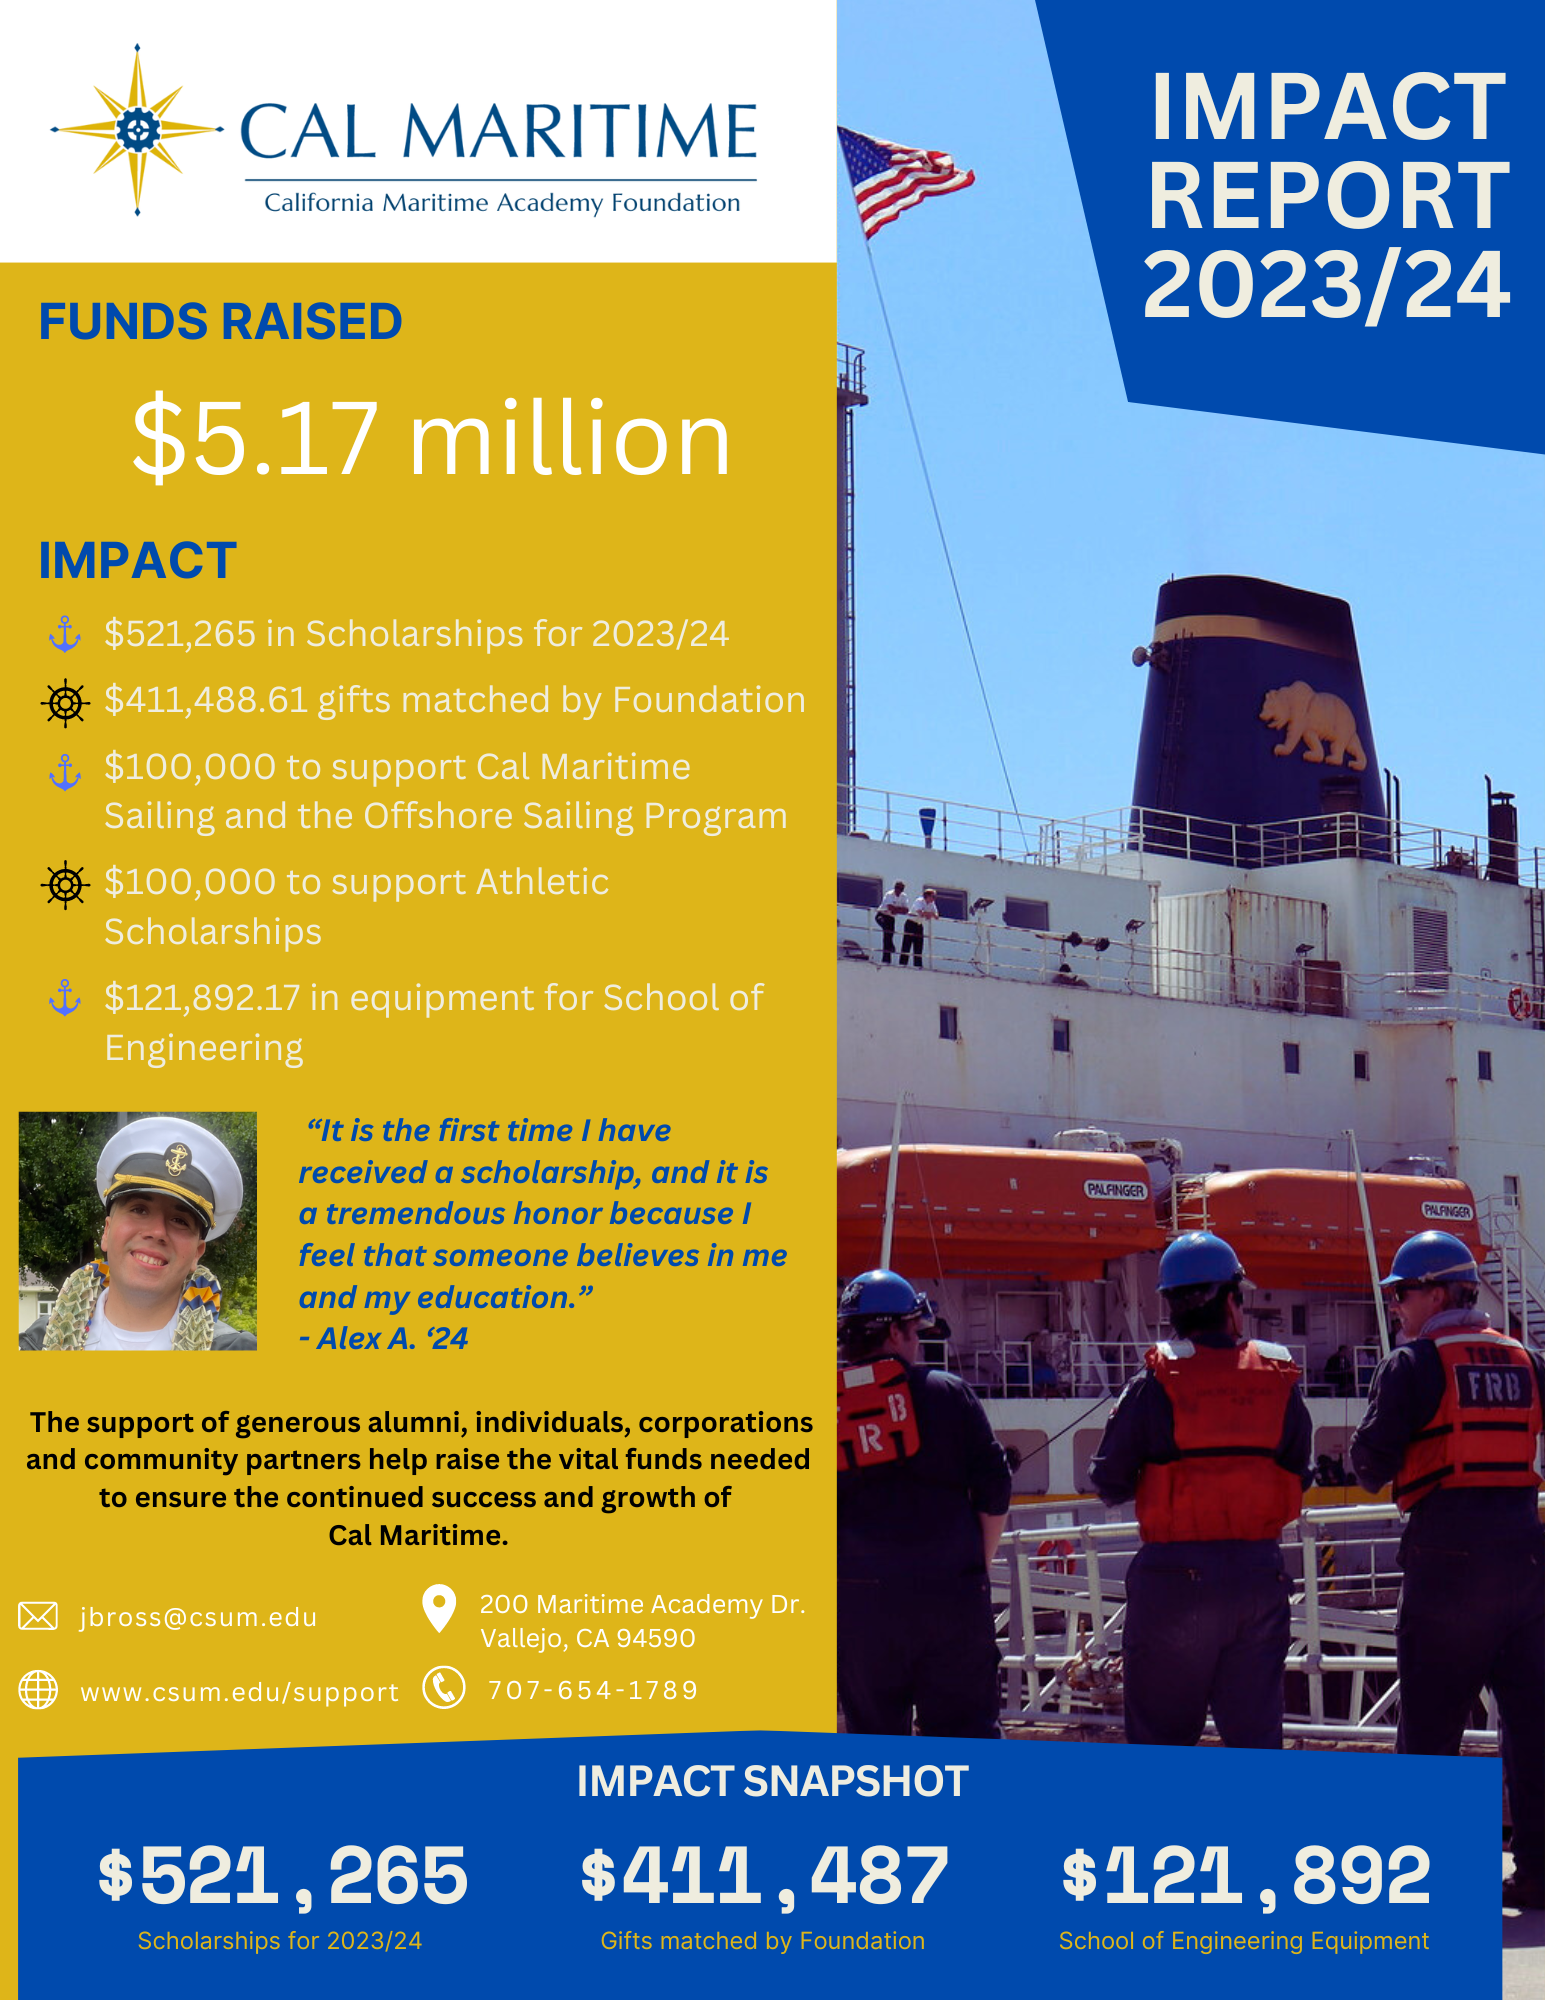 CMAF Impact Report 2023/24